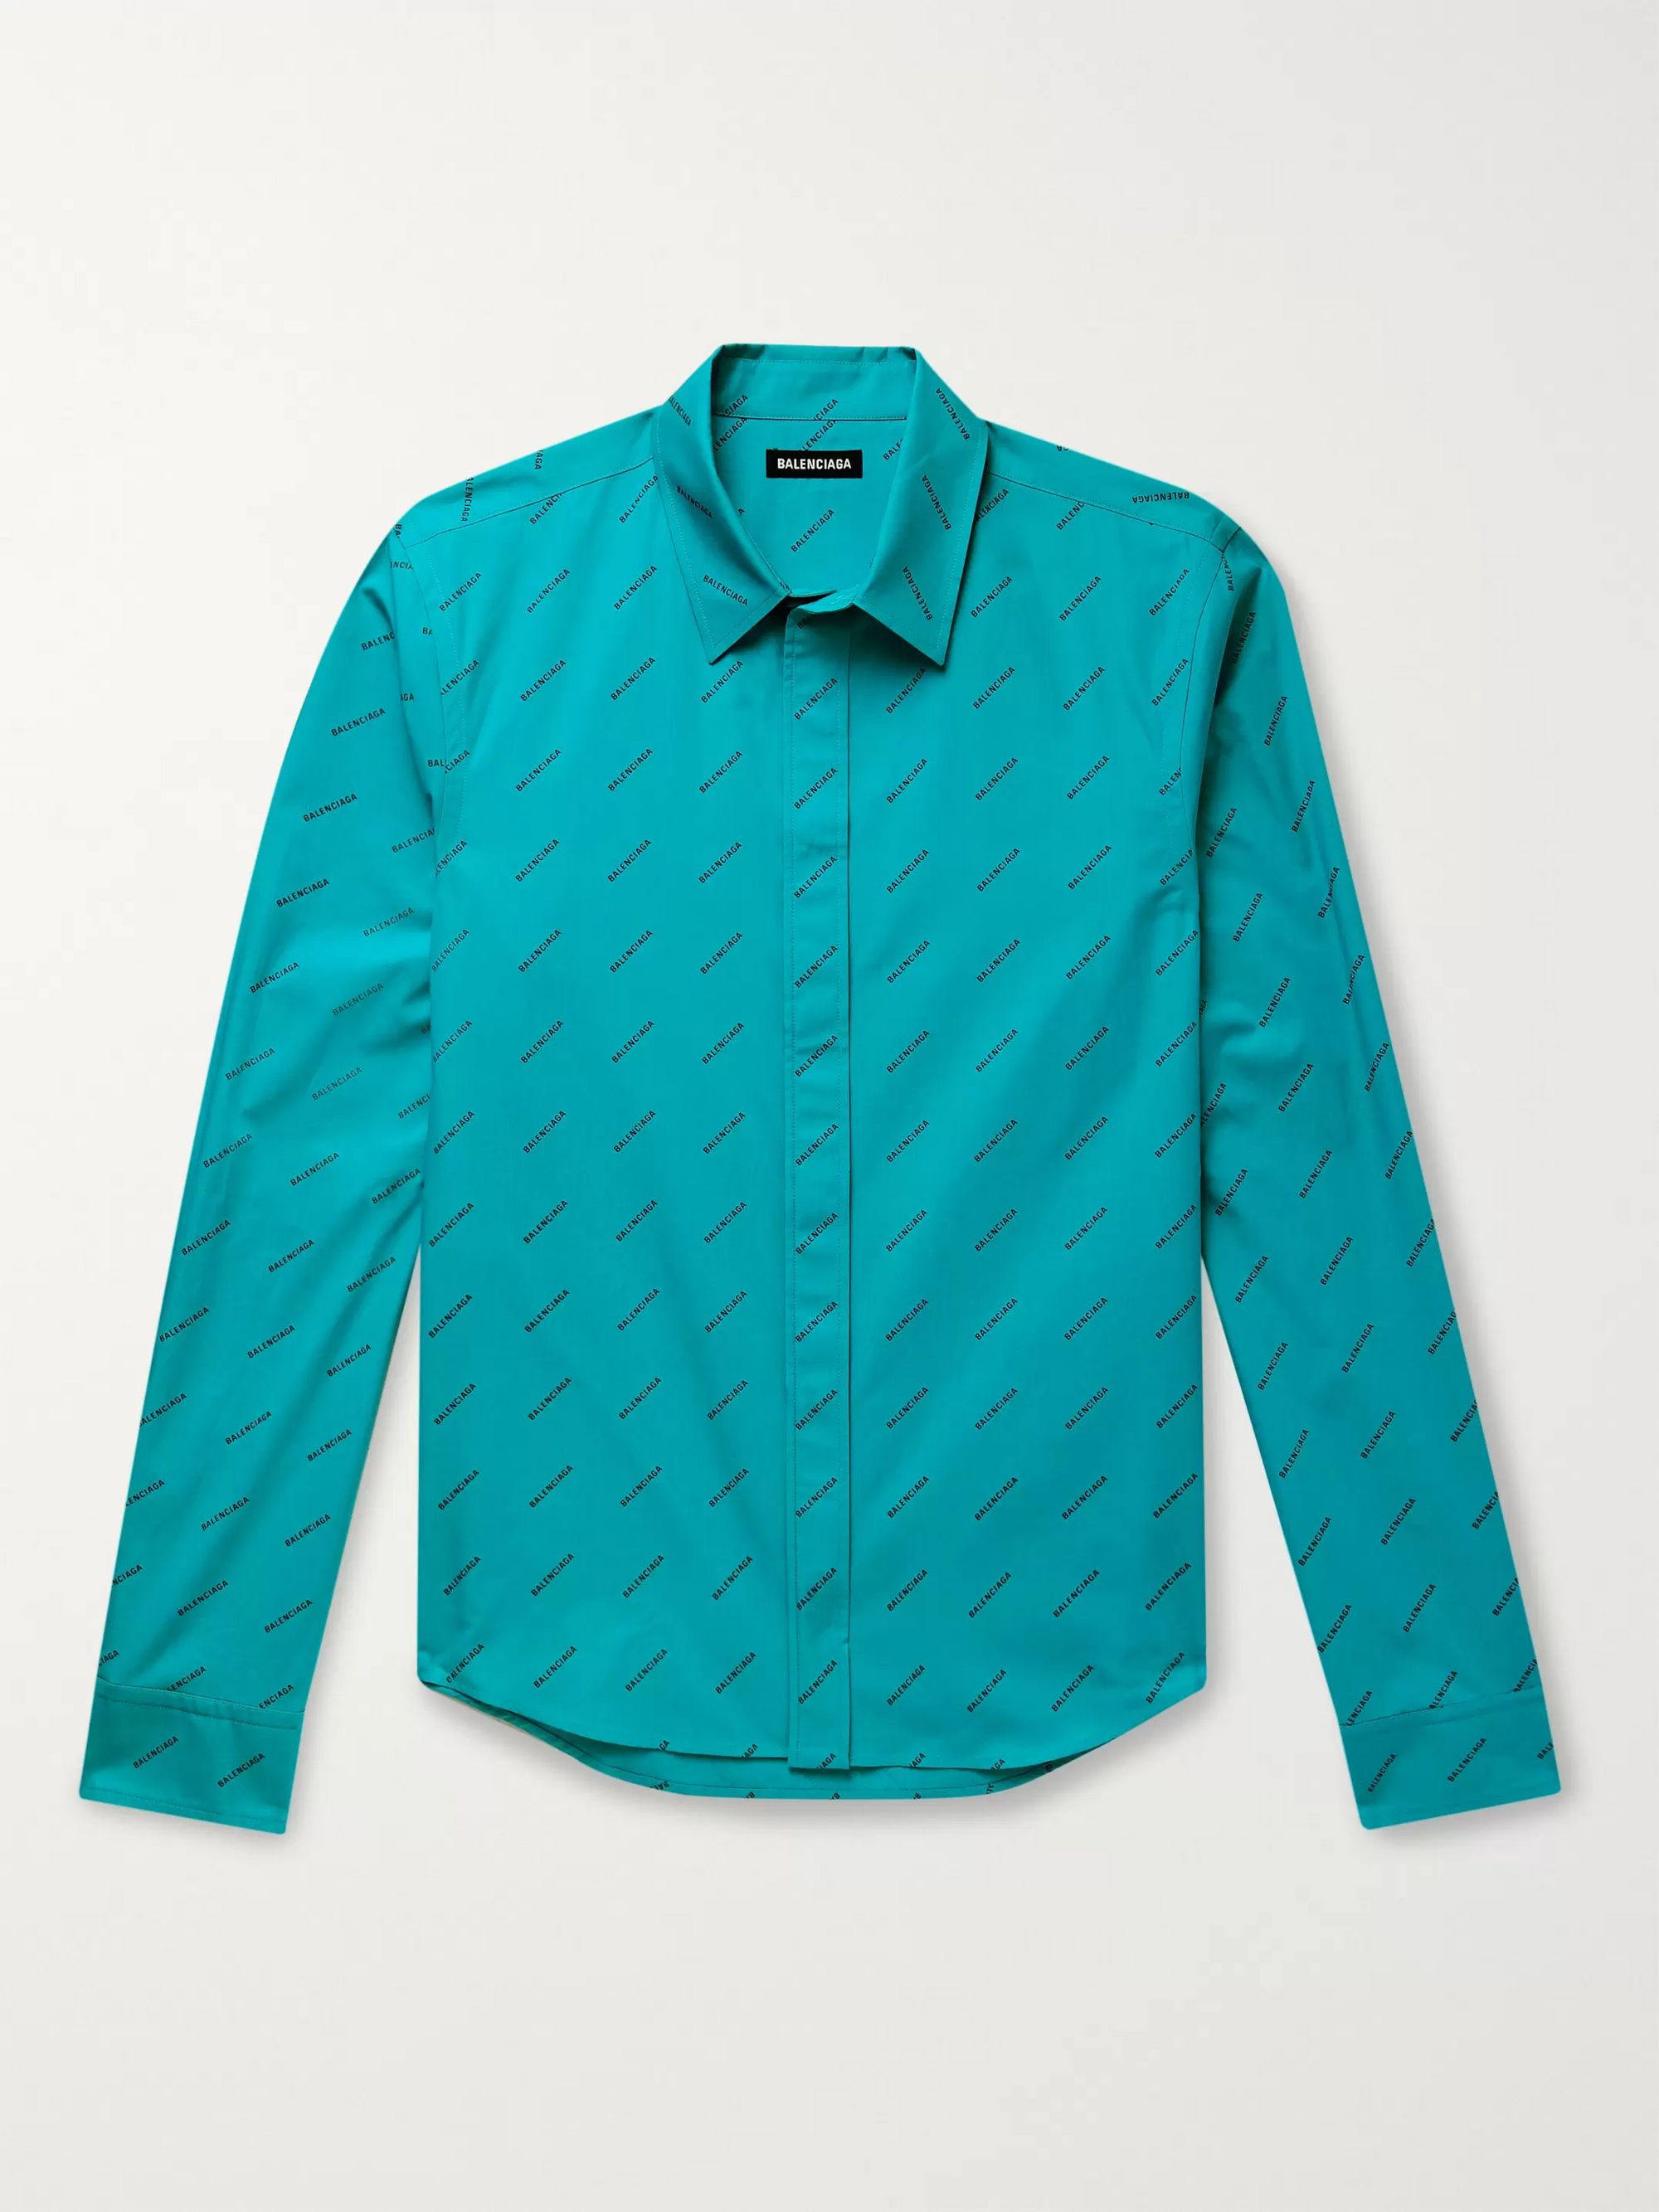 Balenciaga Printed Shirt Discount, 53% OFF | campingcanyelles.com